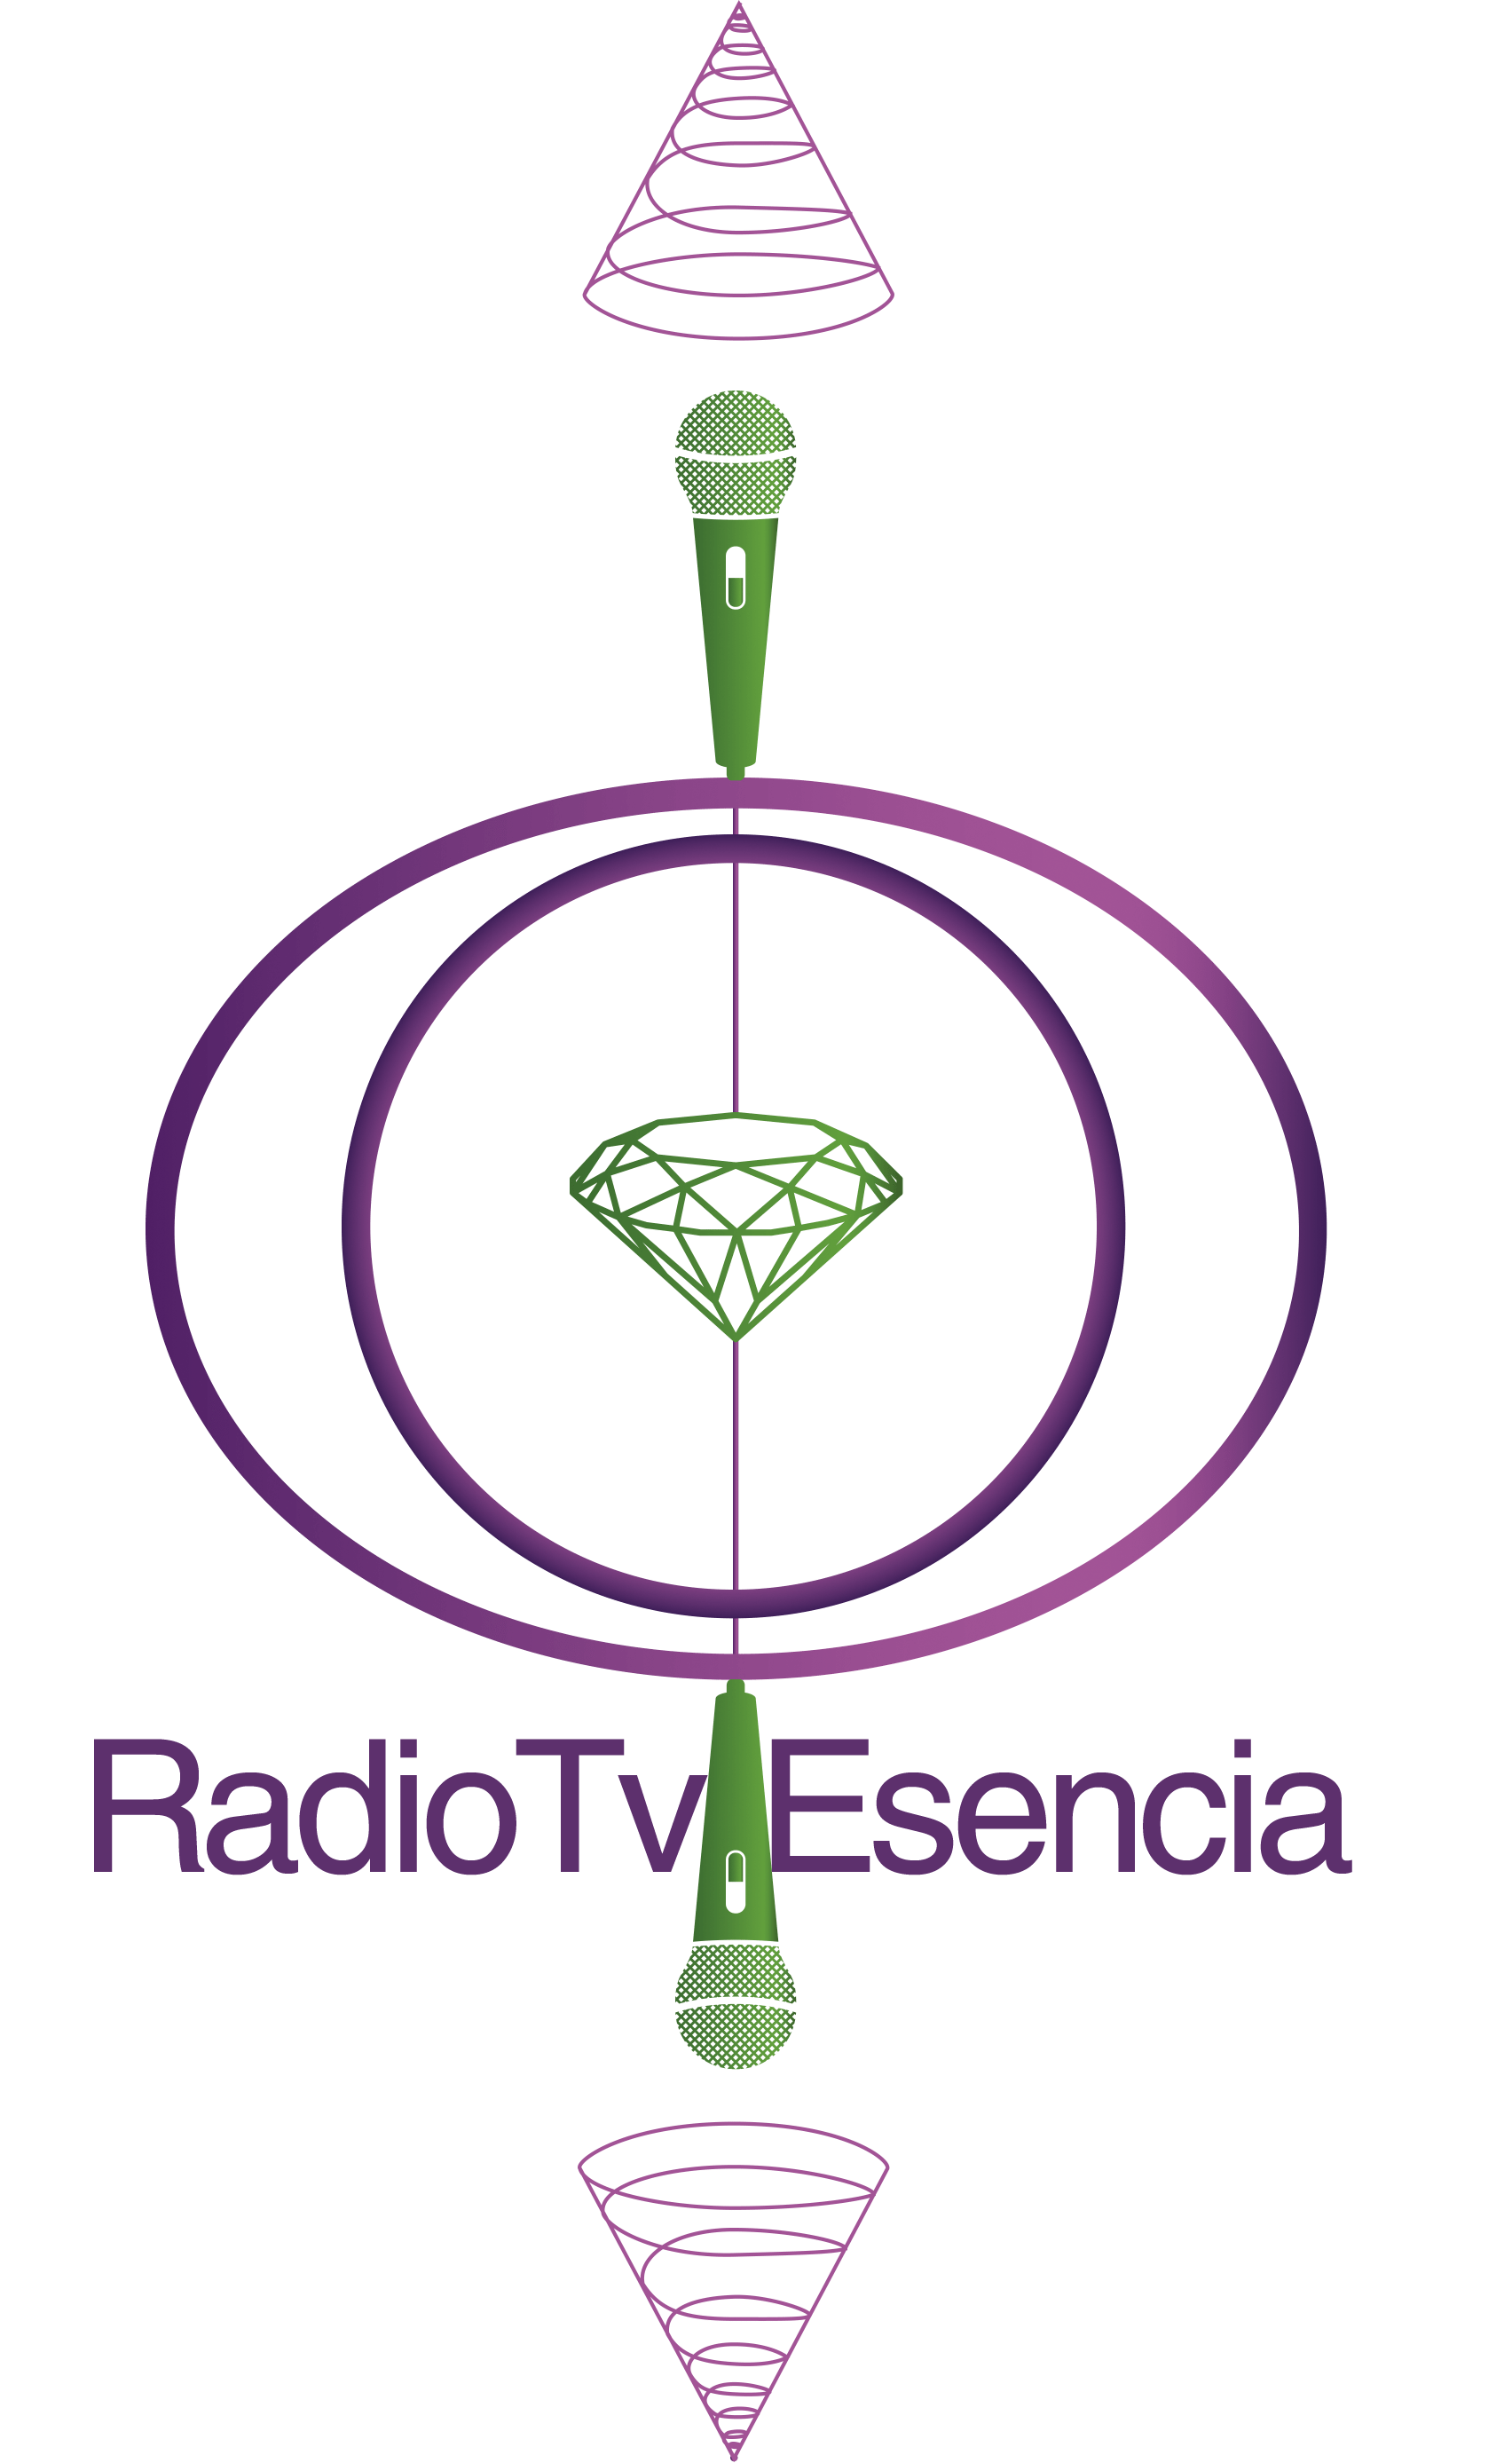 RadioTv esencia